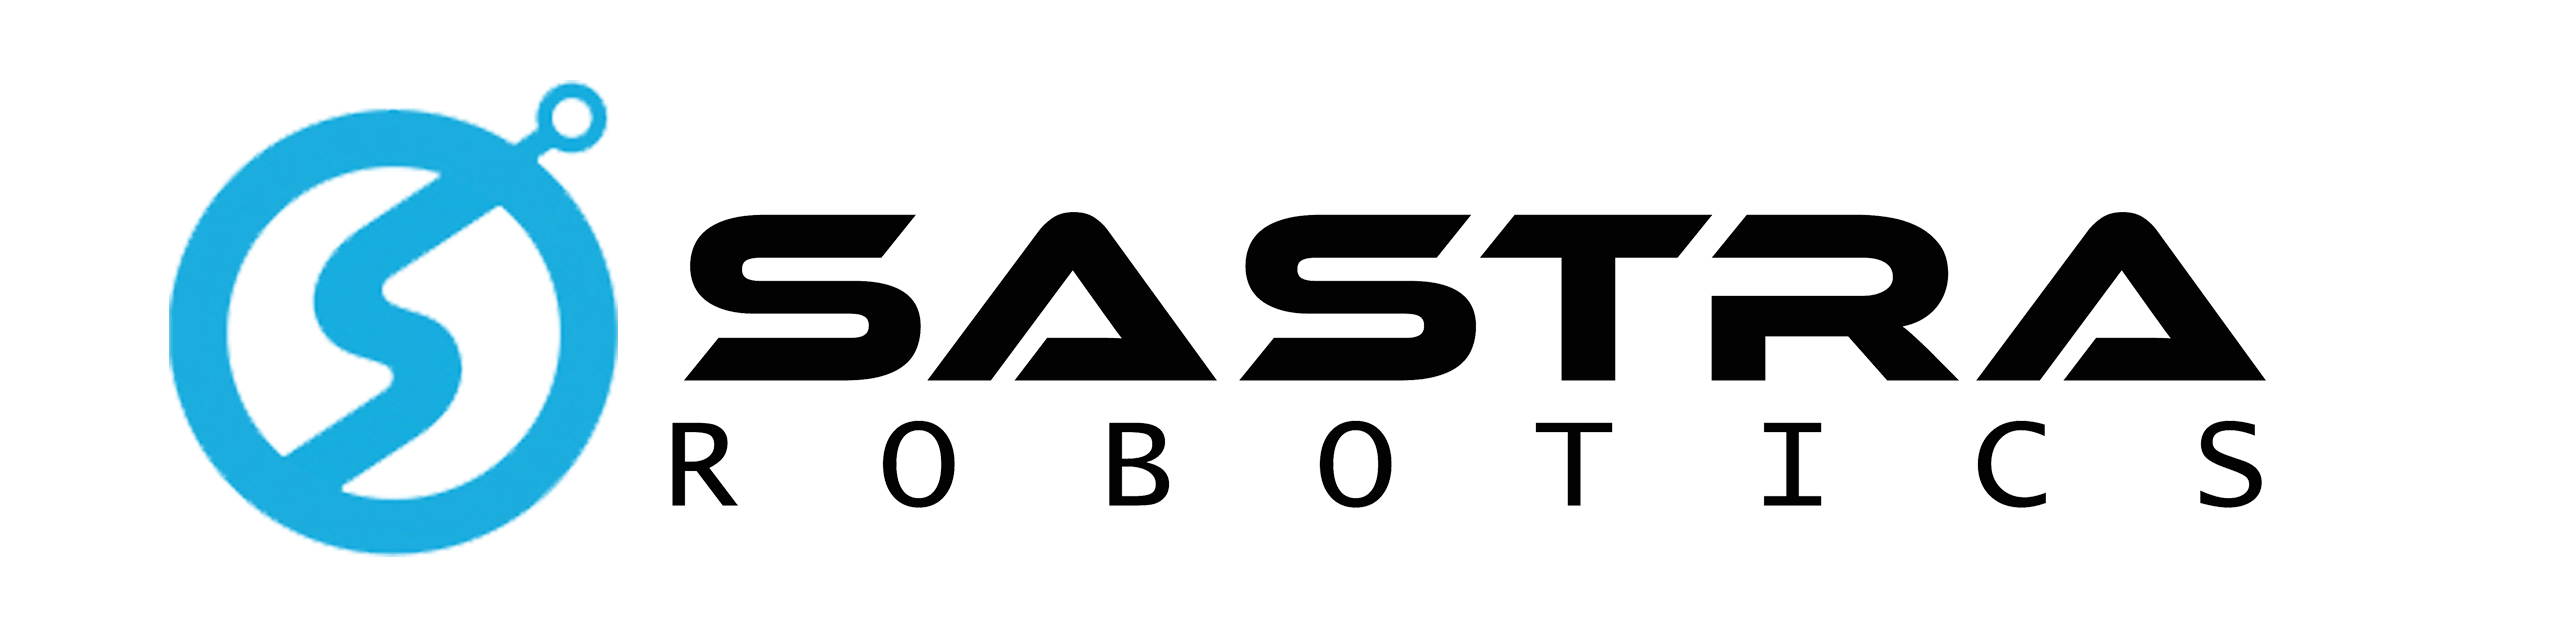 Robot Company Logo - Commandments for Creating Resume for a Robotics Company